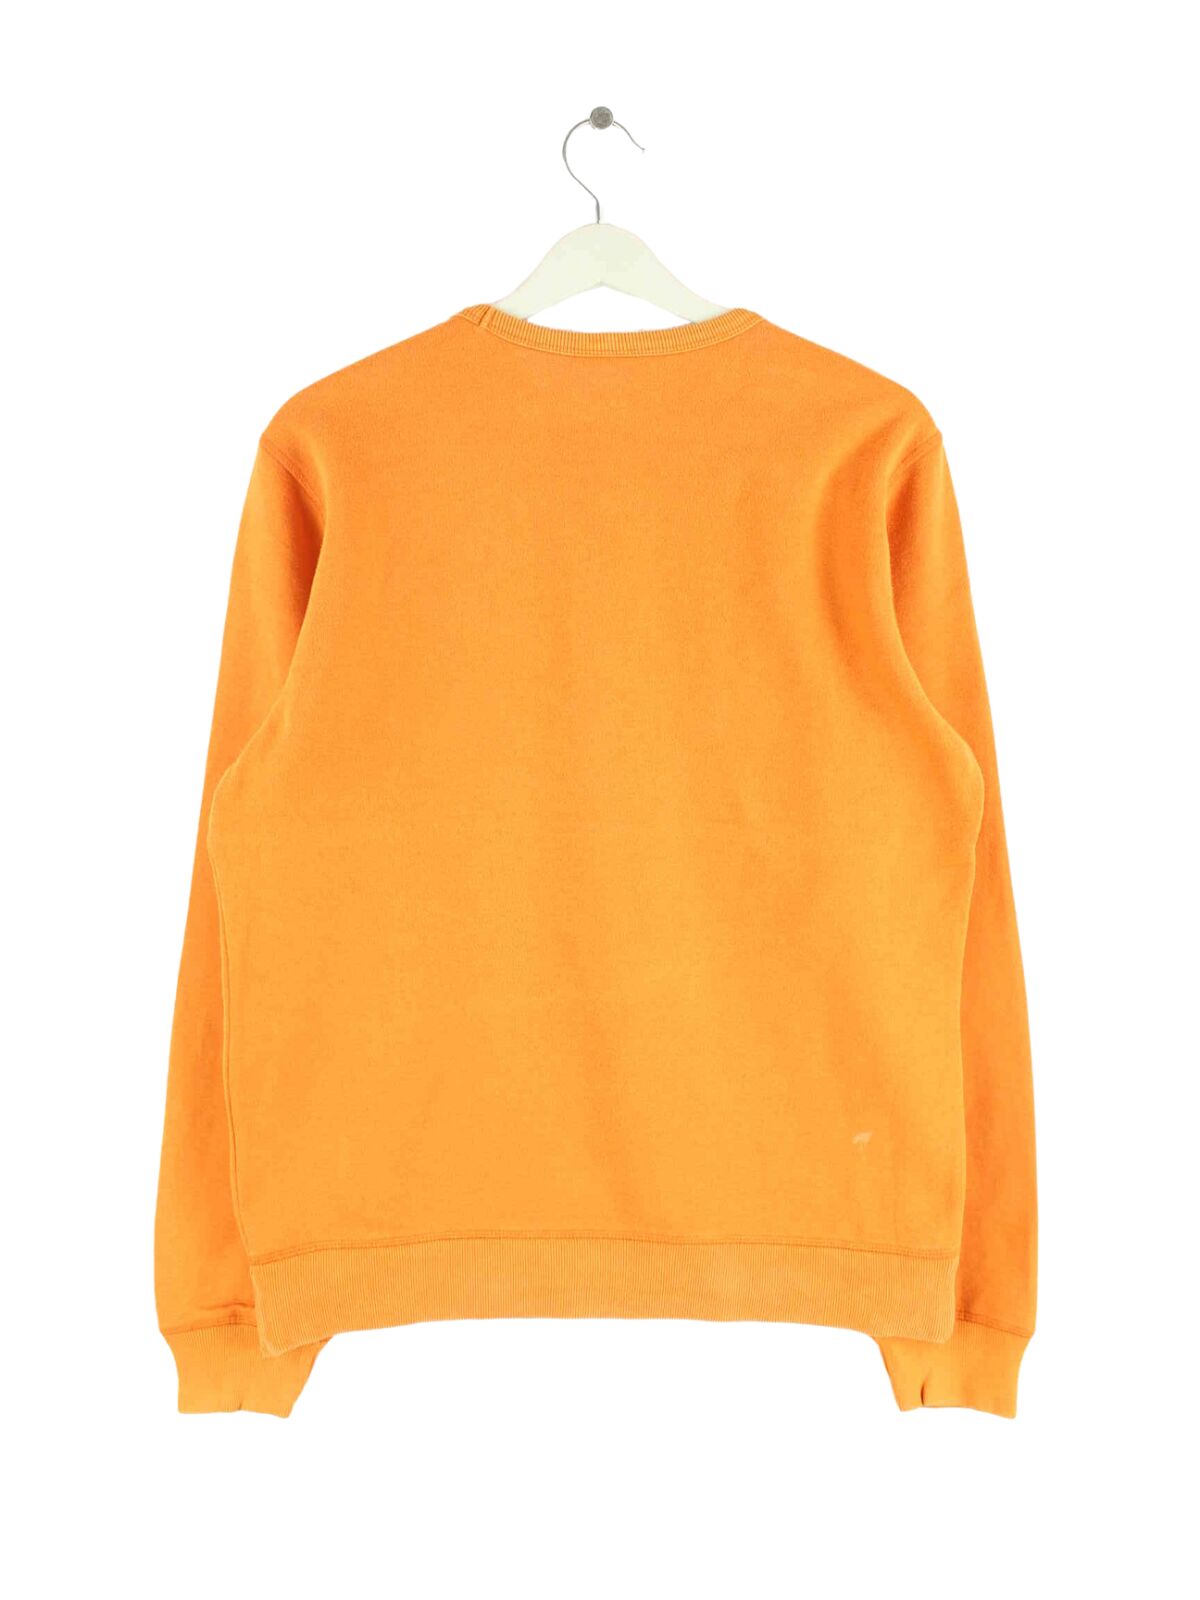 Champion Embroidered Logo Sweater Orange S (back image)